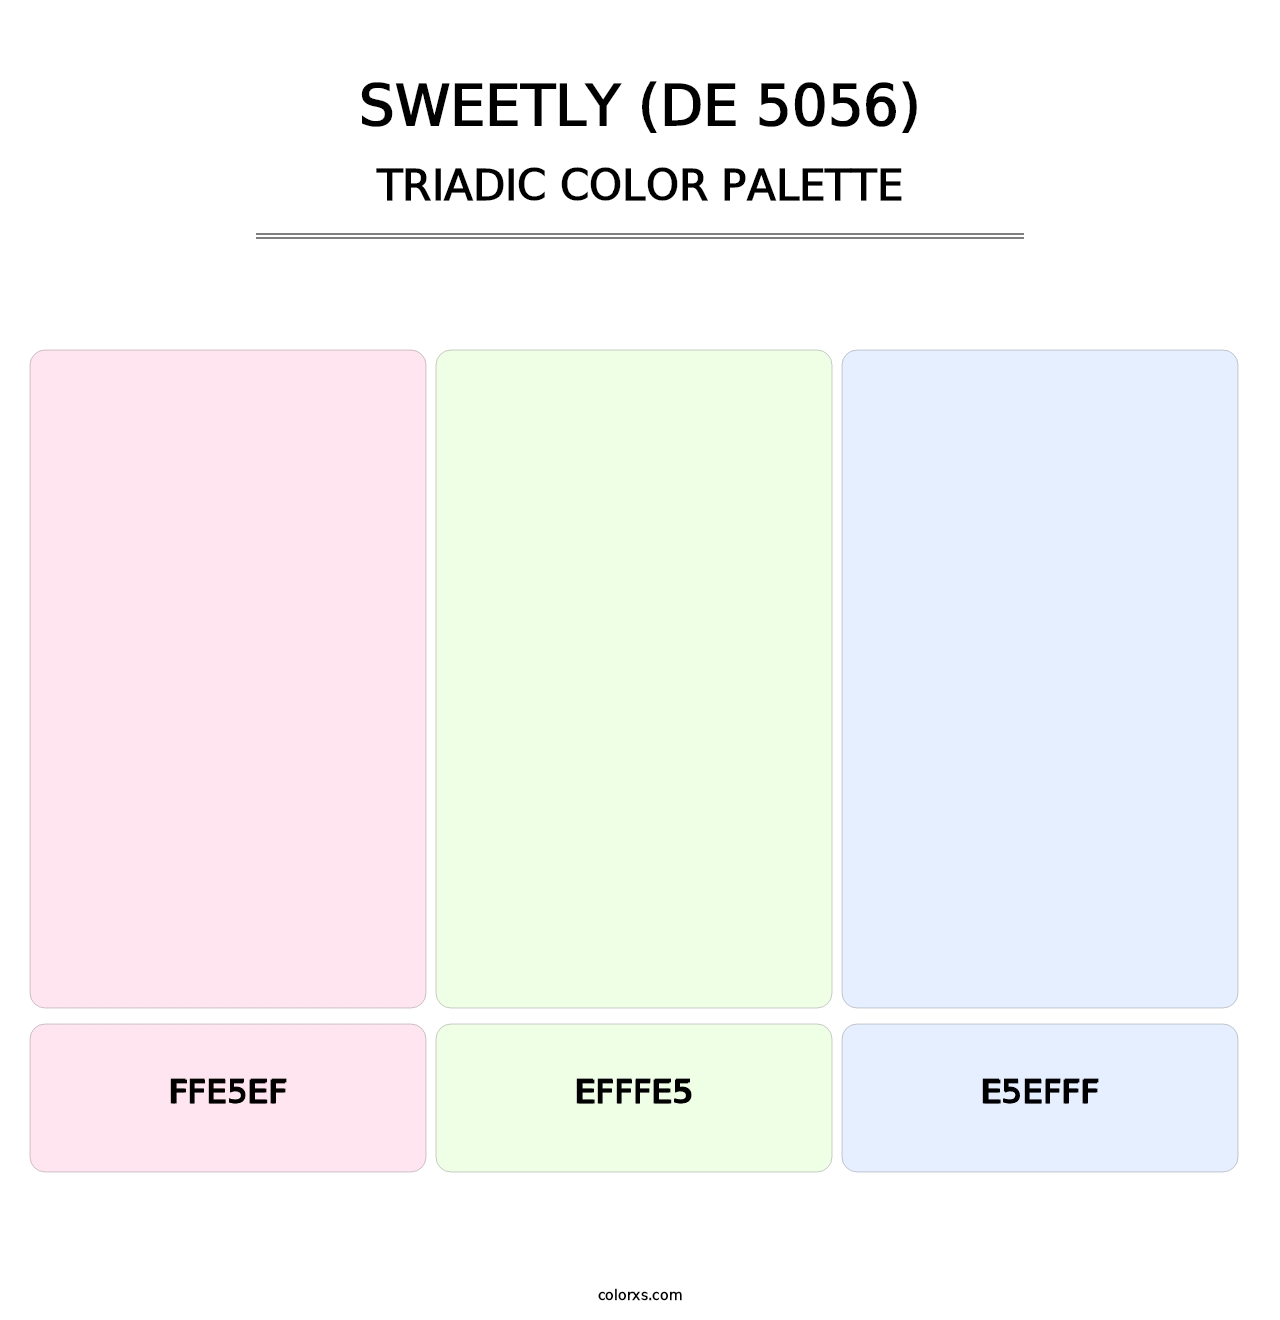 Sweetly (DE 5056) - Triadic Color Palette